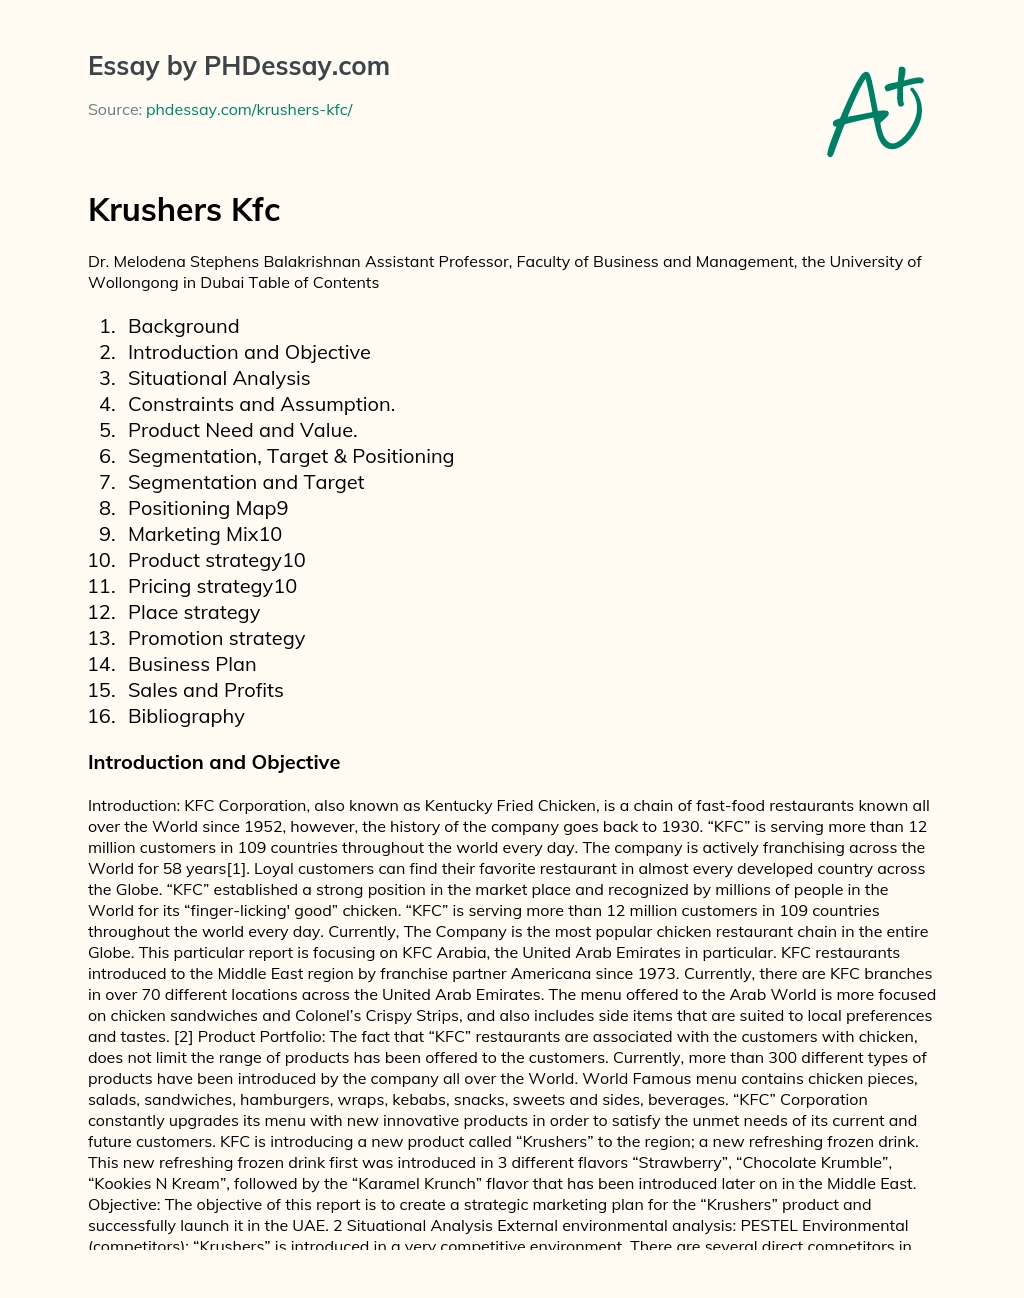 Krushers Kfc essay